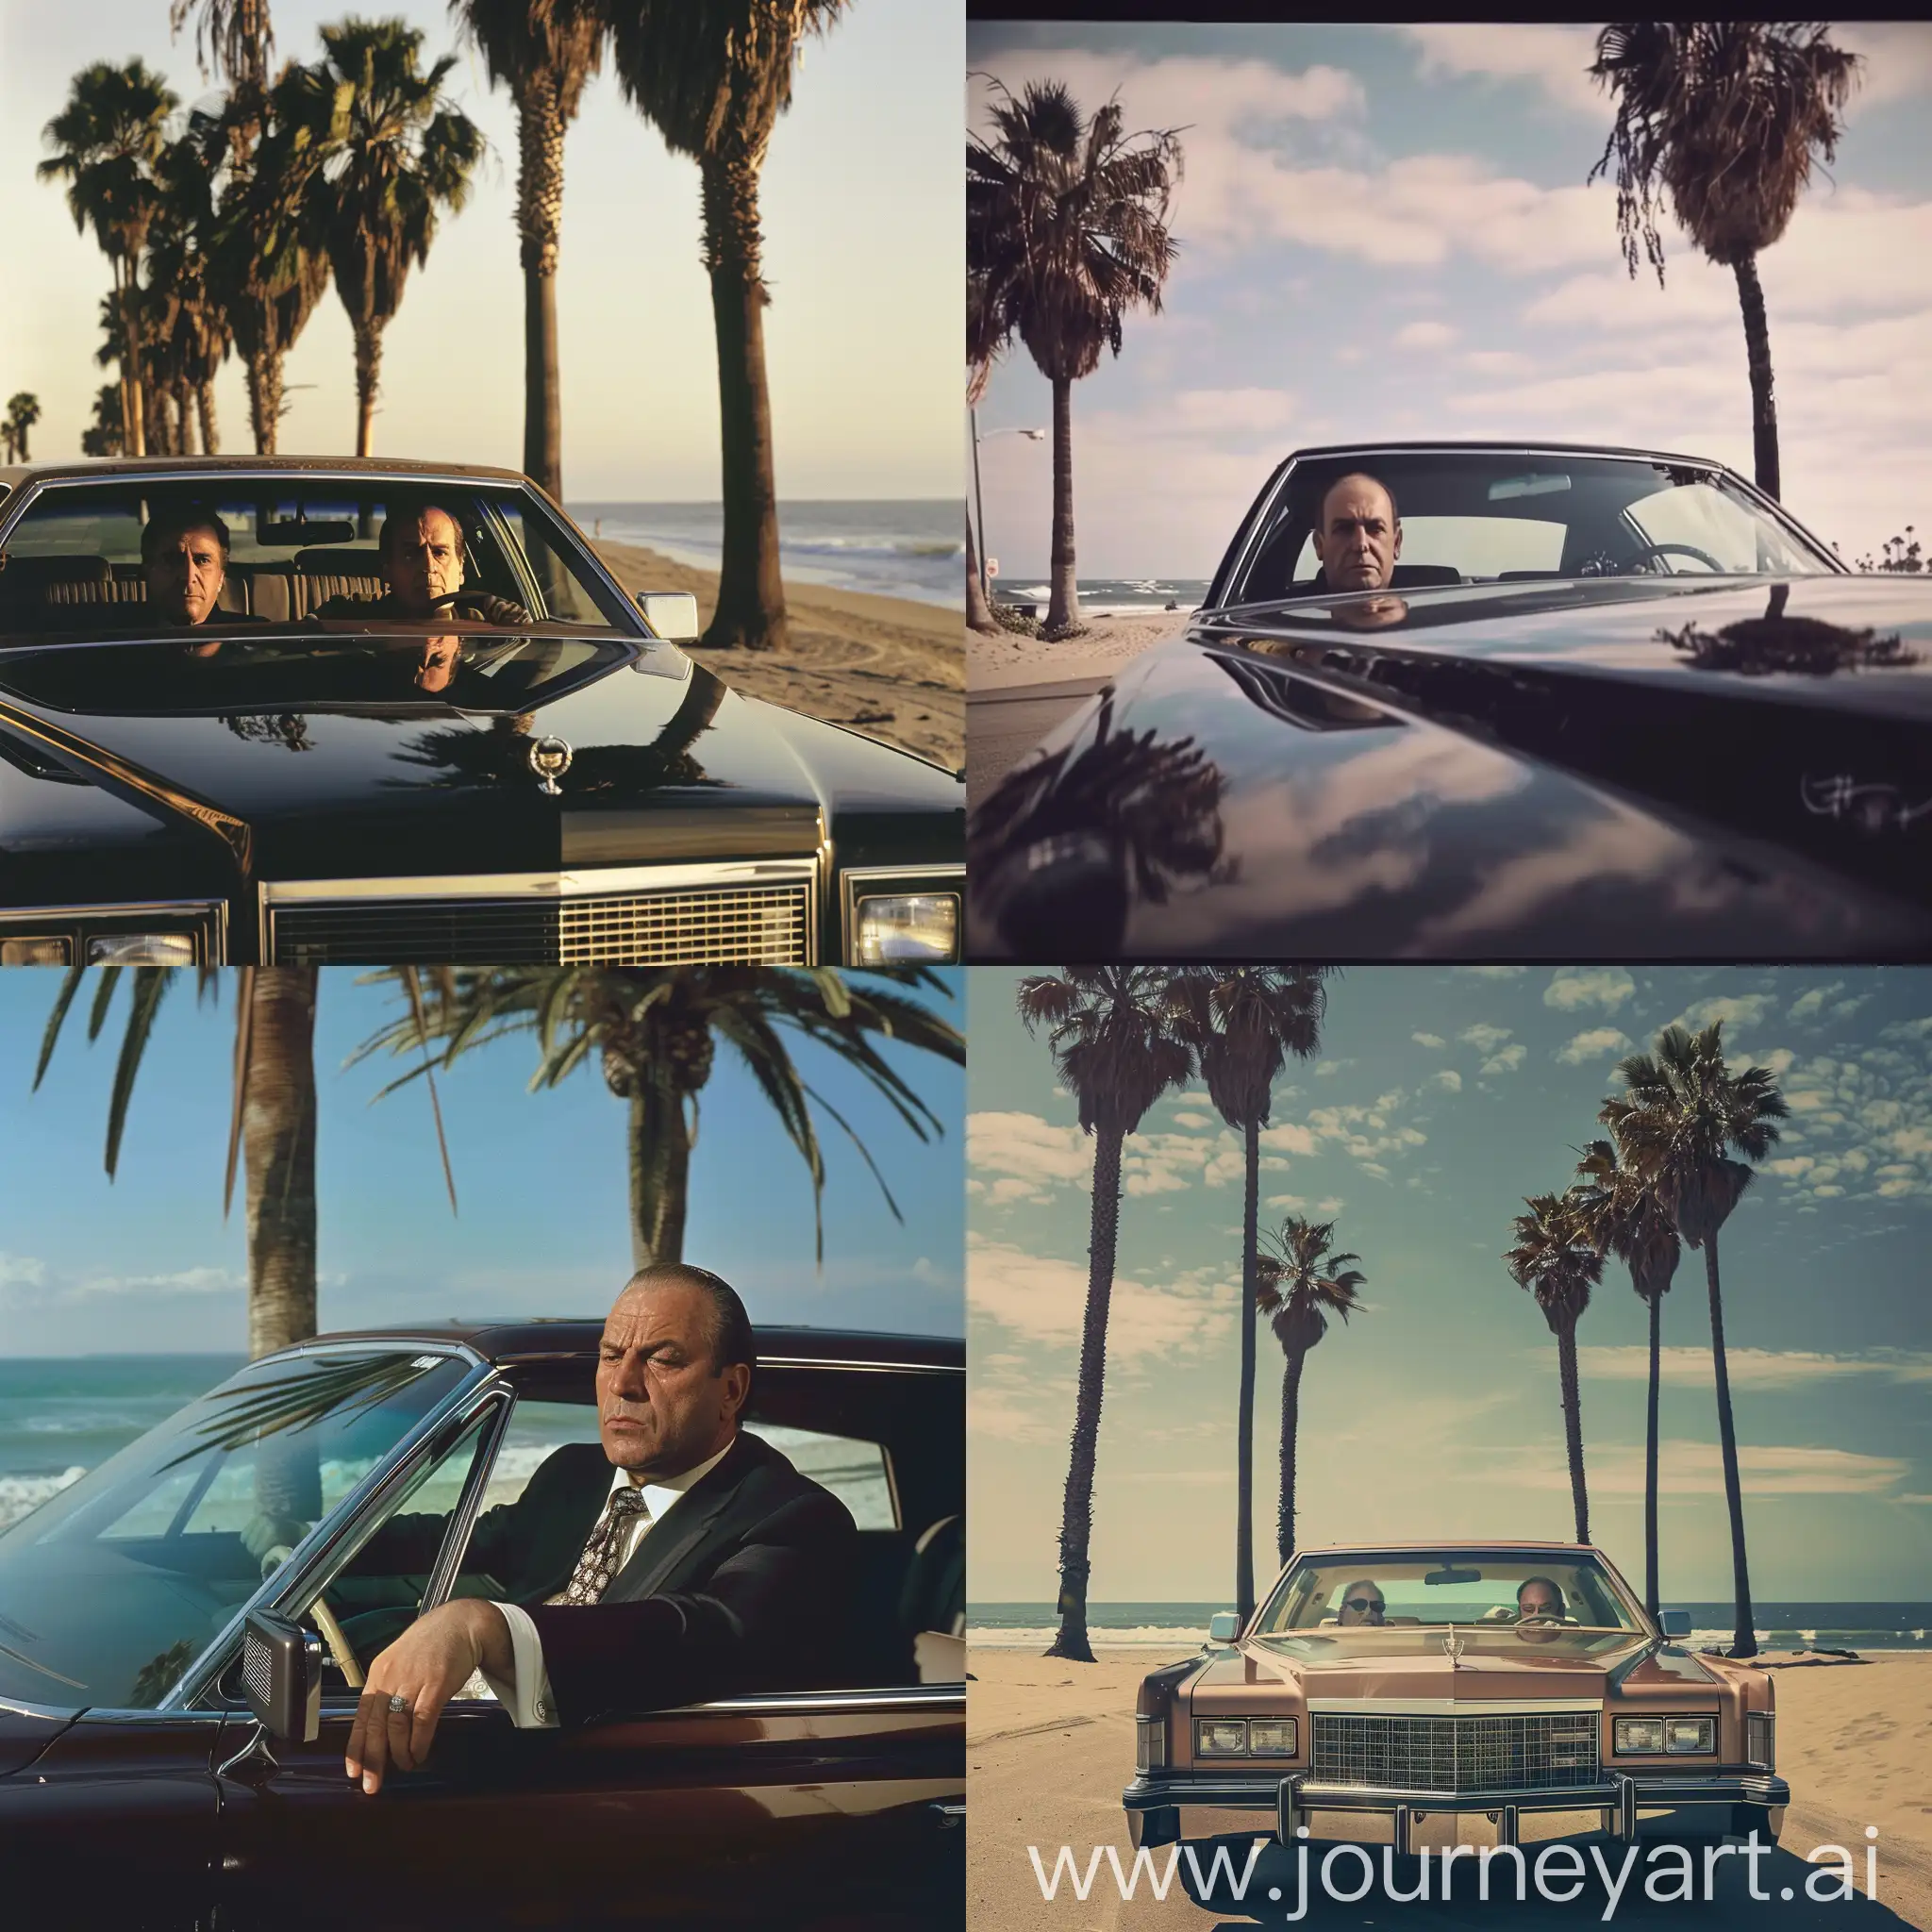 Tony-Soprano-Driving-Cadillac-in-California-Beach-Scene